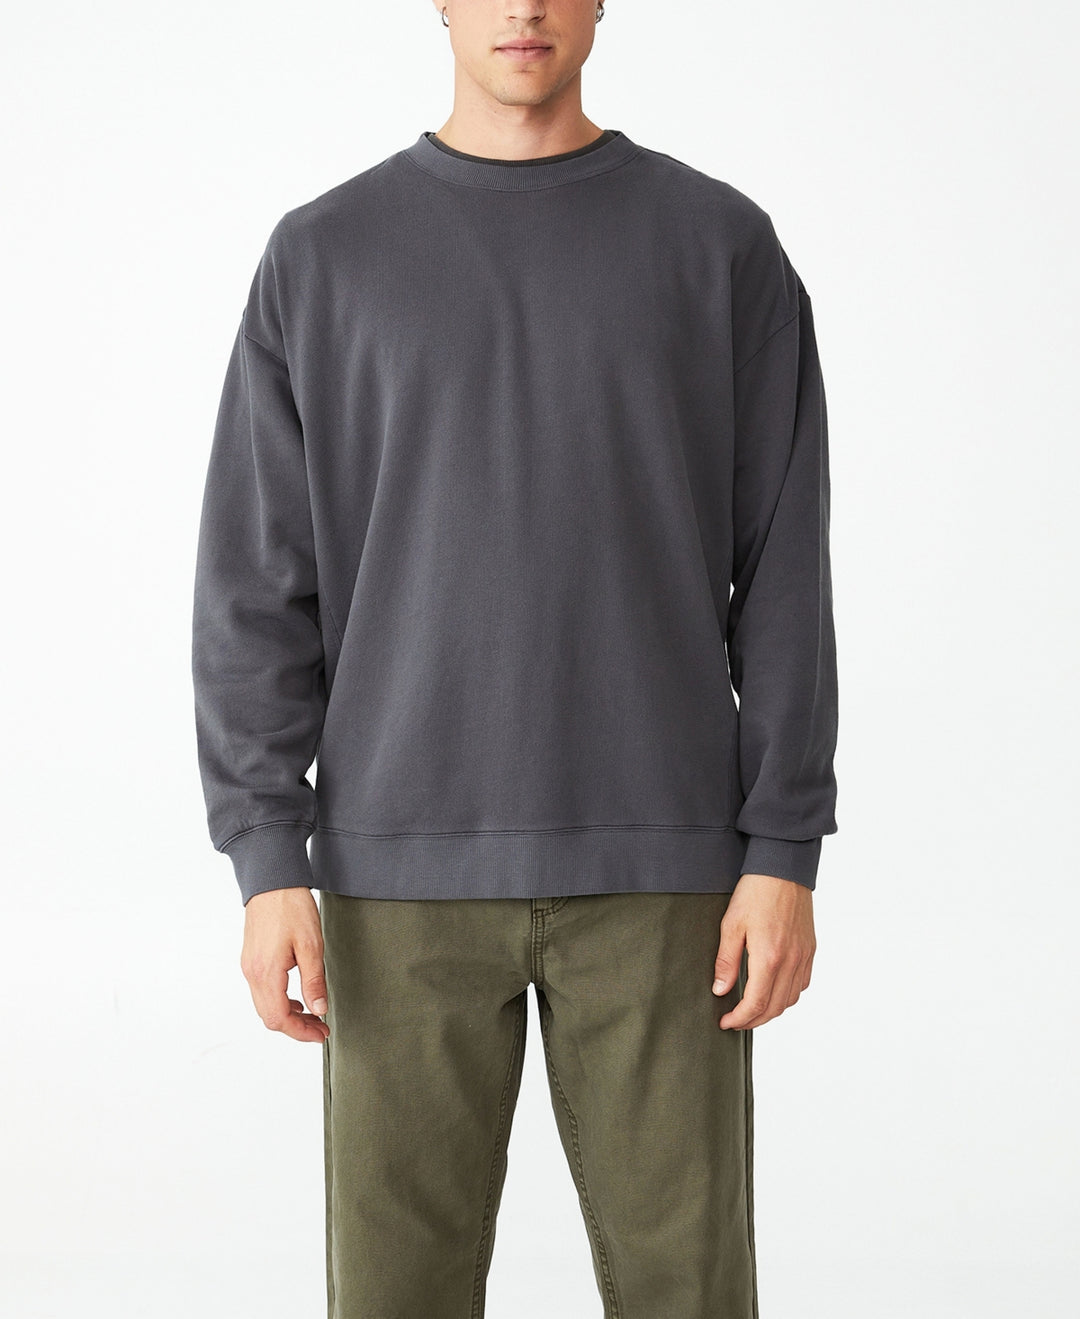 COTTON ON Men's Pigment Dyed Oversized Crew Sweatshirt Gray Size Large